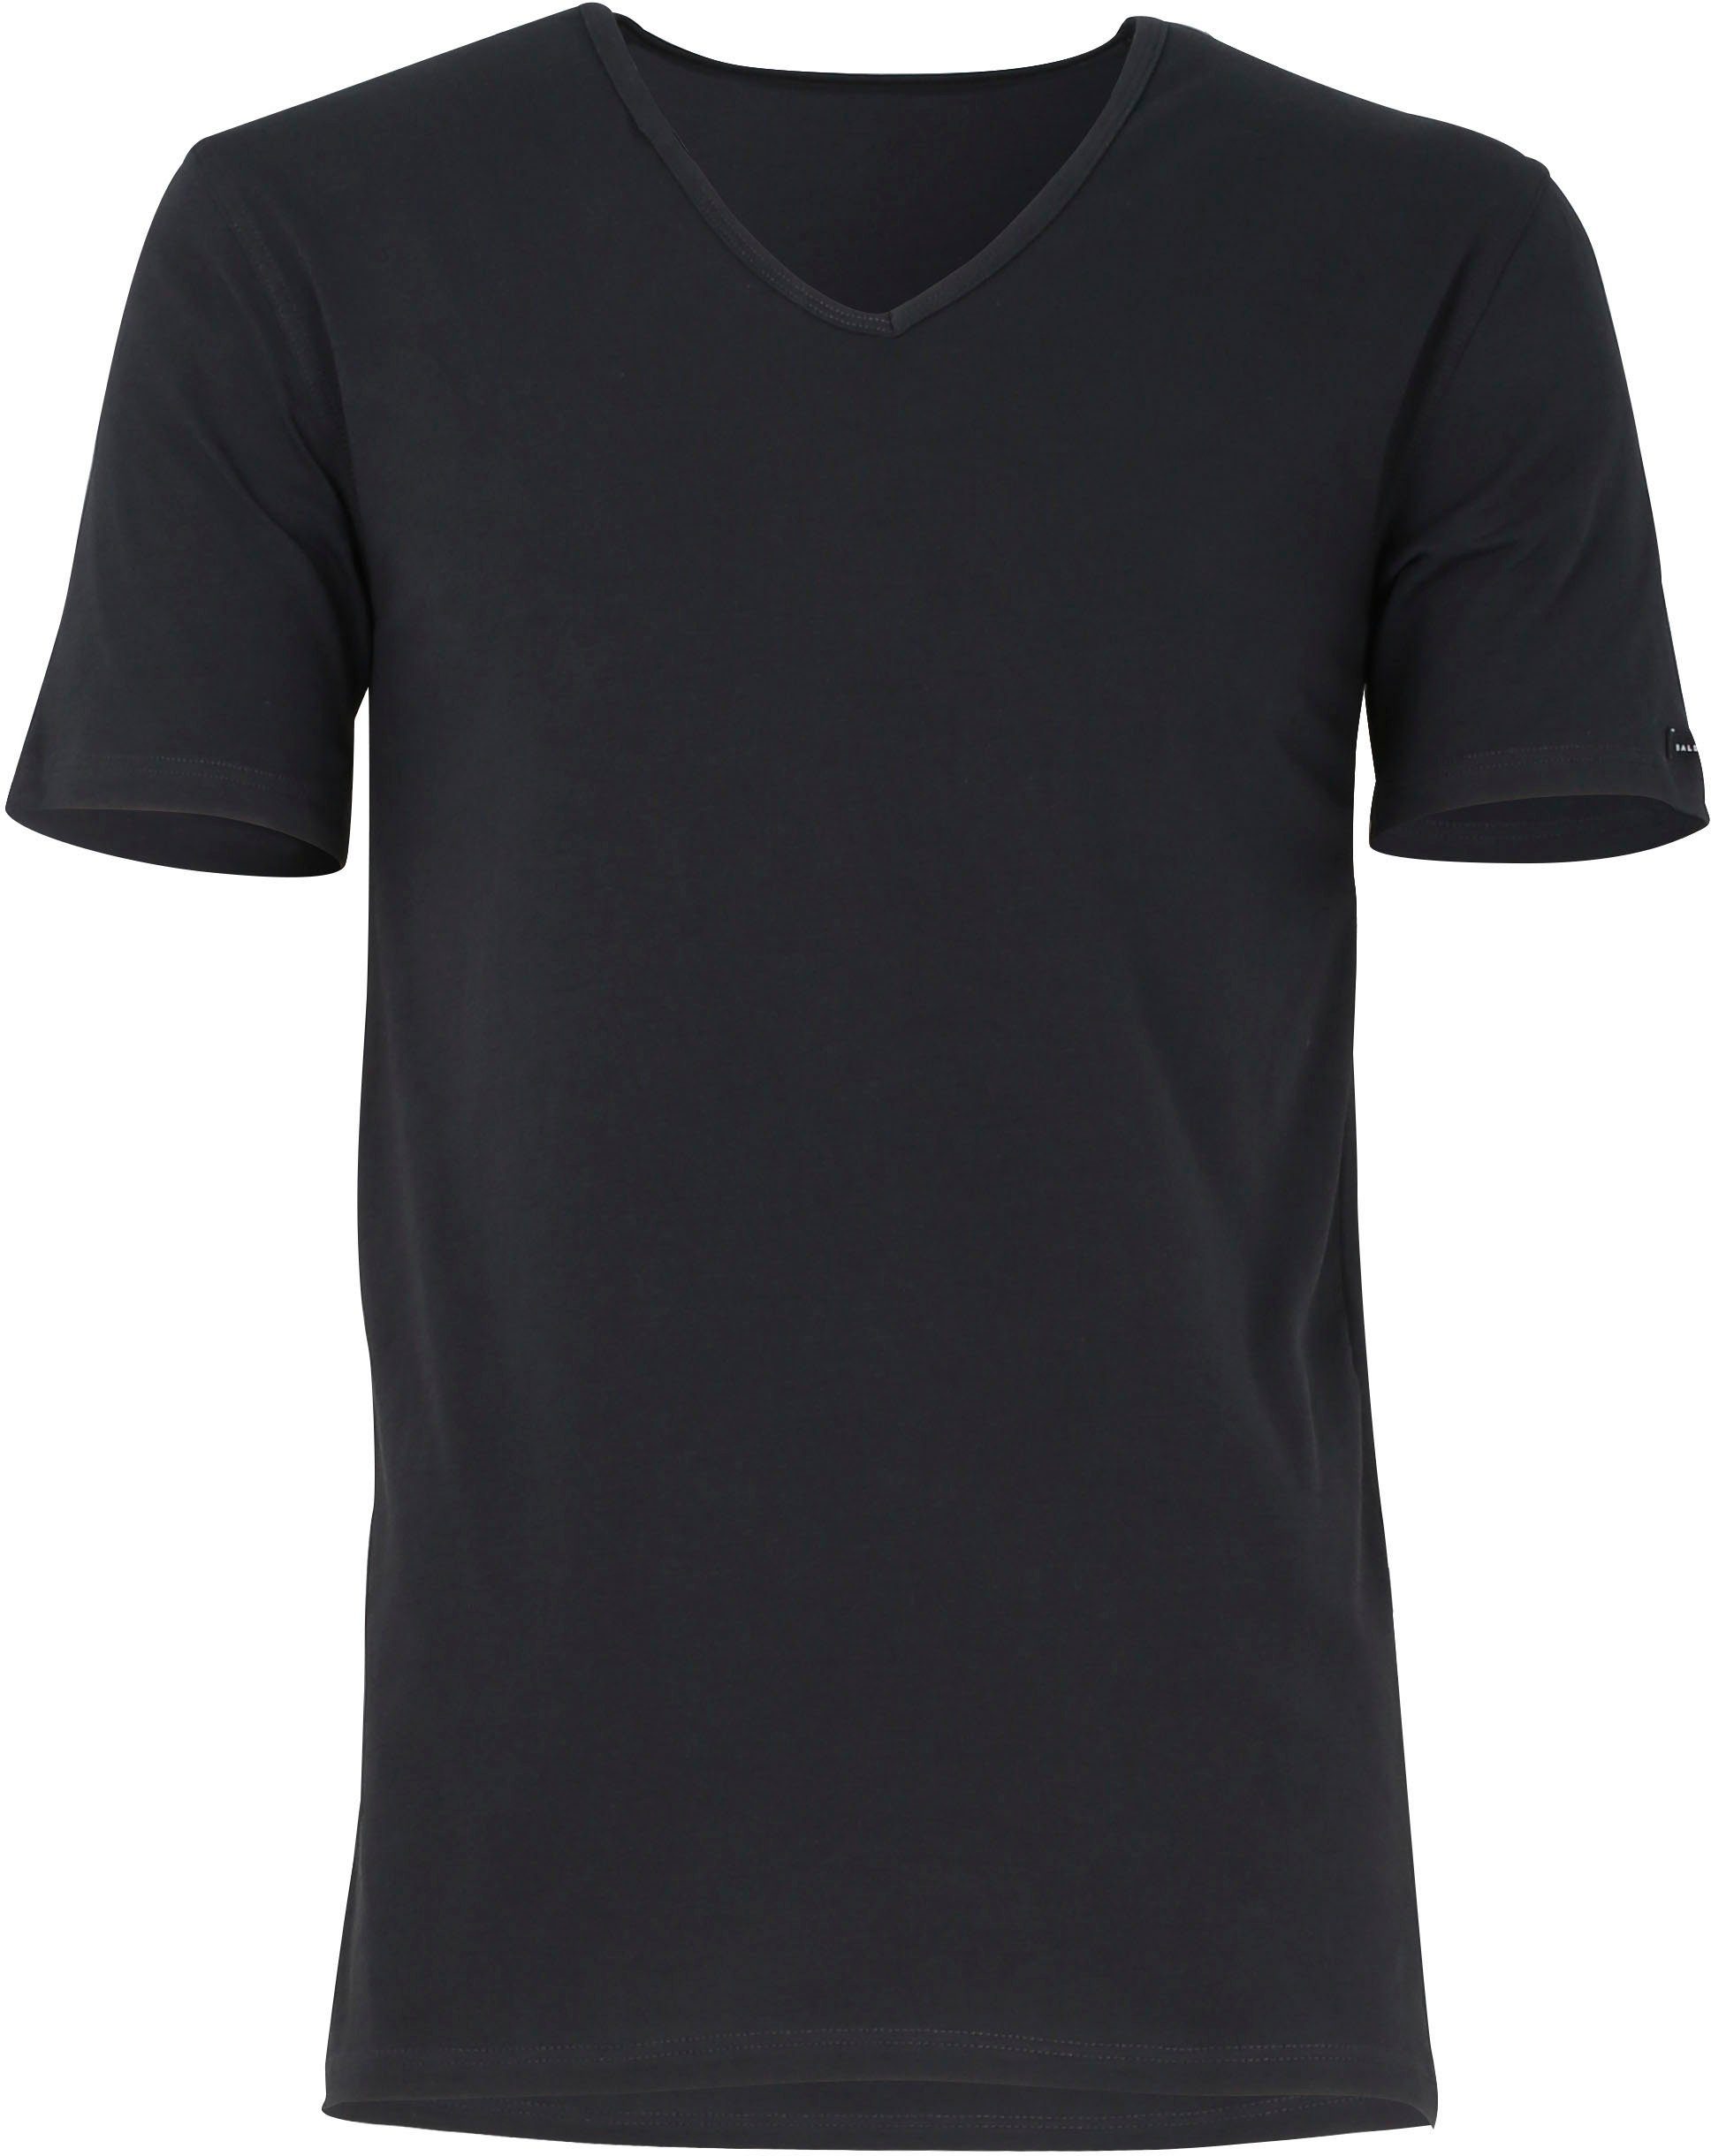 BALDESSARINI Unterhemd Shirt, 1/2, V-Aussc schwarz-dunkel-uni